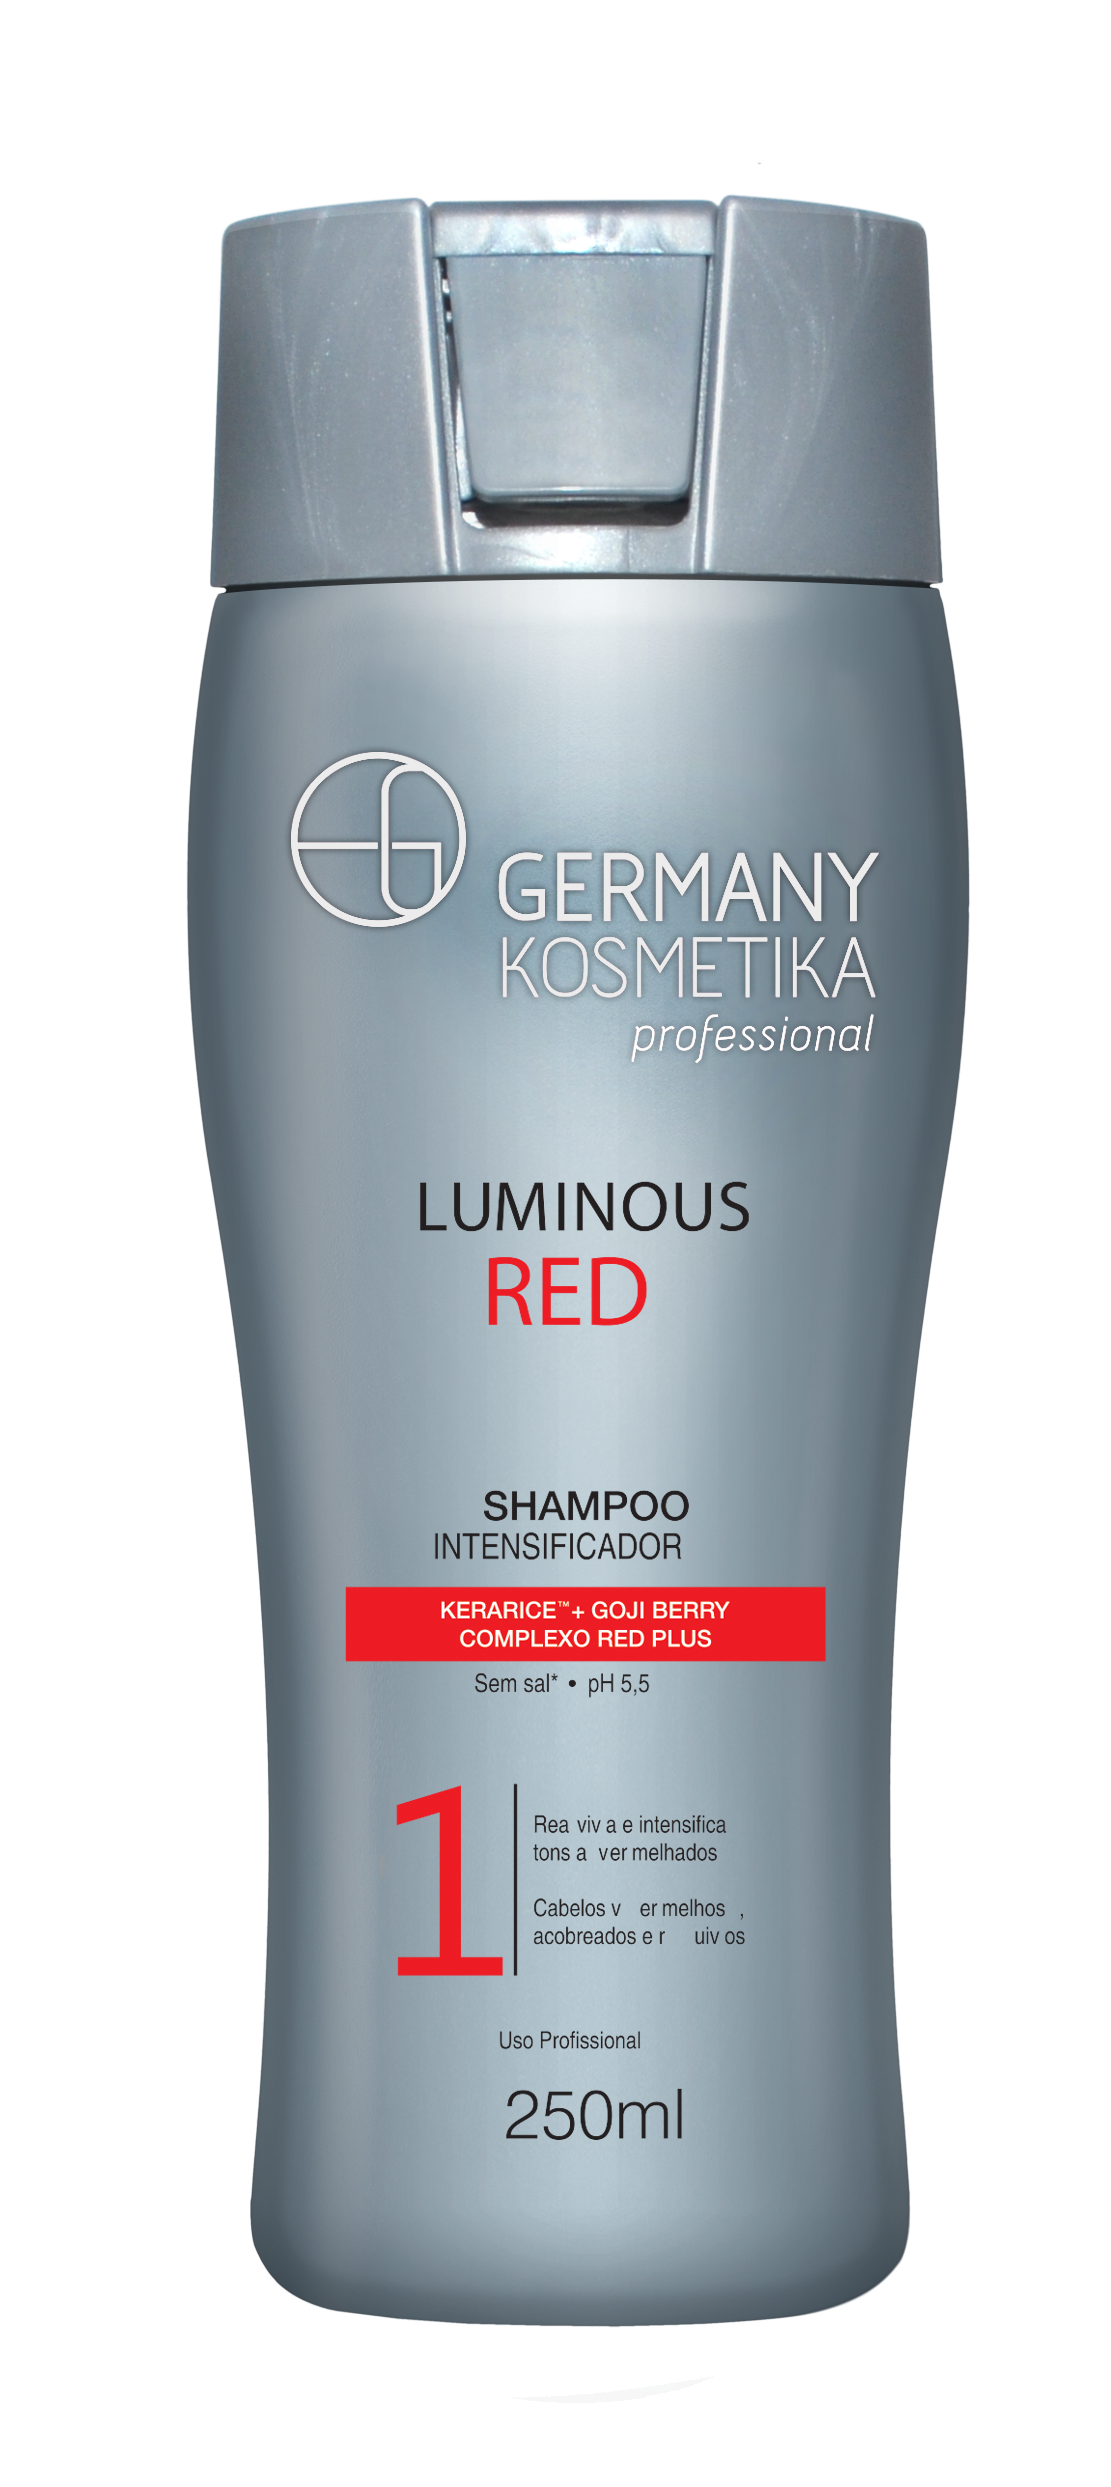 GERMANY Luminous RED